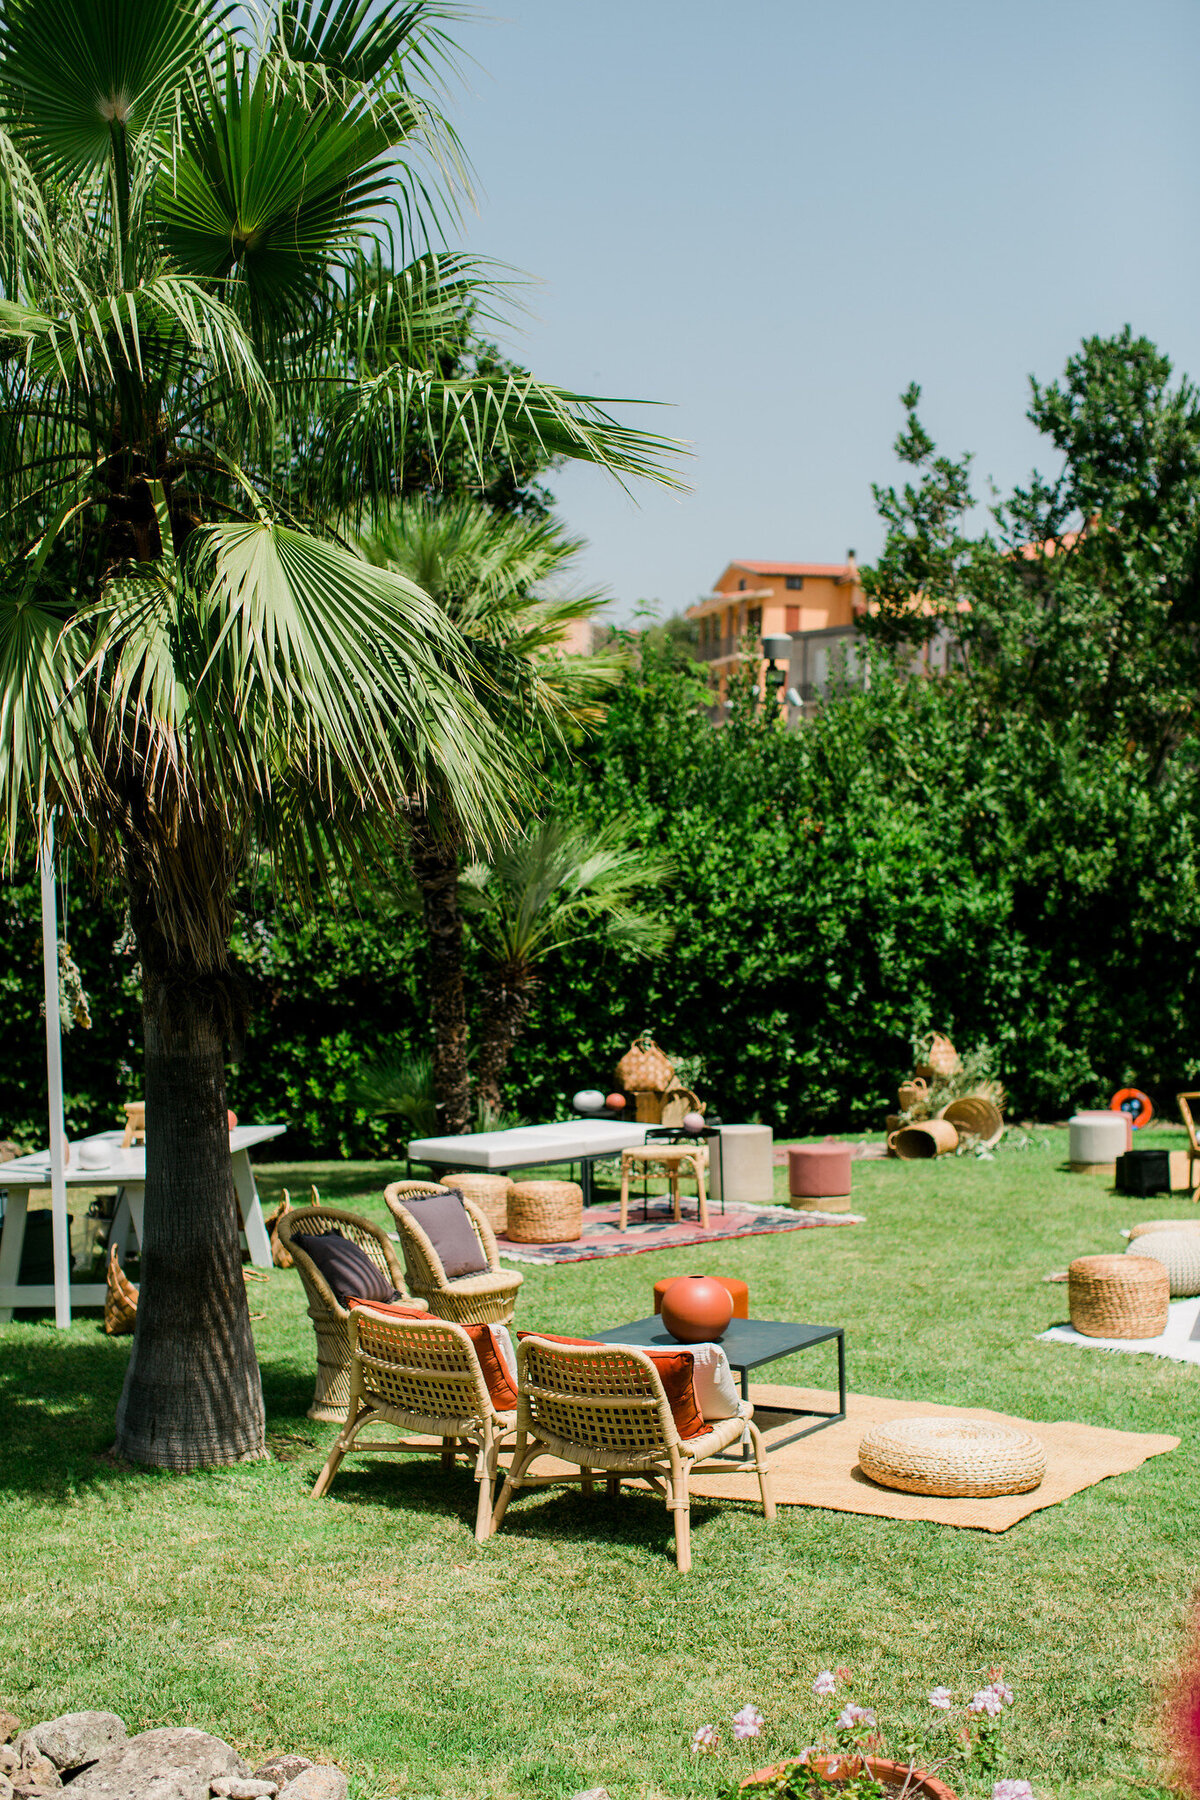 A contemporary lounge areas for a destination wedding in sardinia